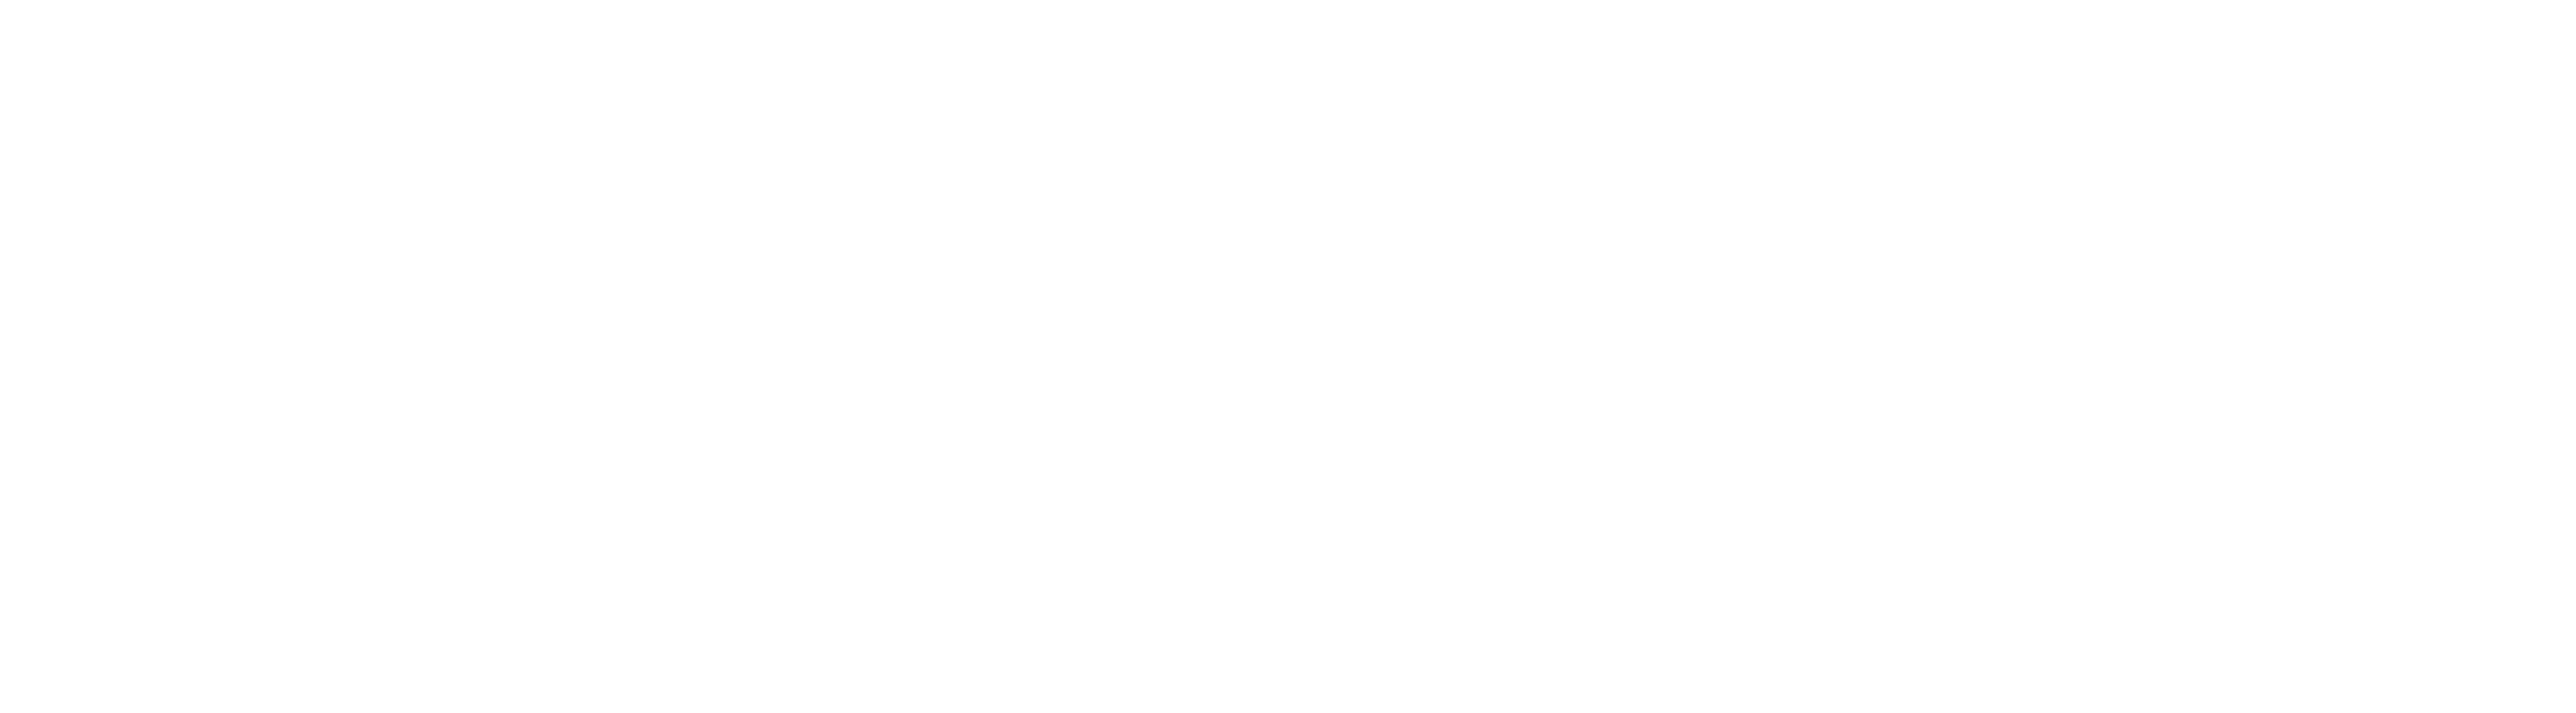 ibood logo